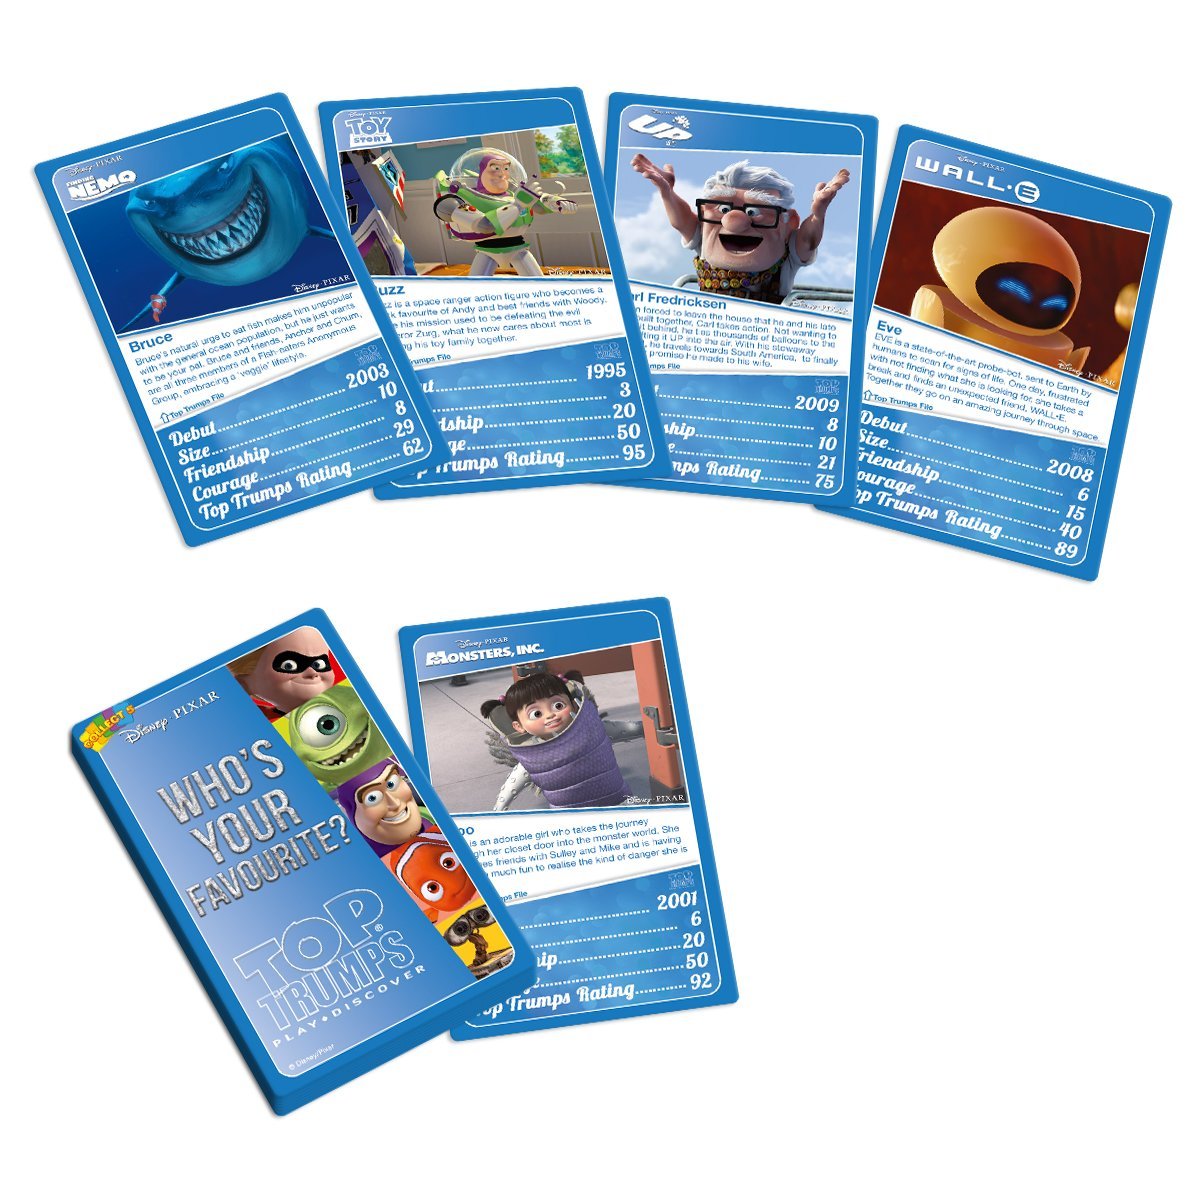 Disney Pixar 'Top Trumps' Collectors Tin Card Game